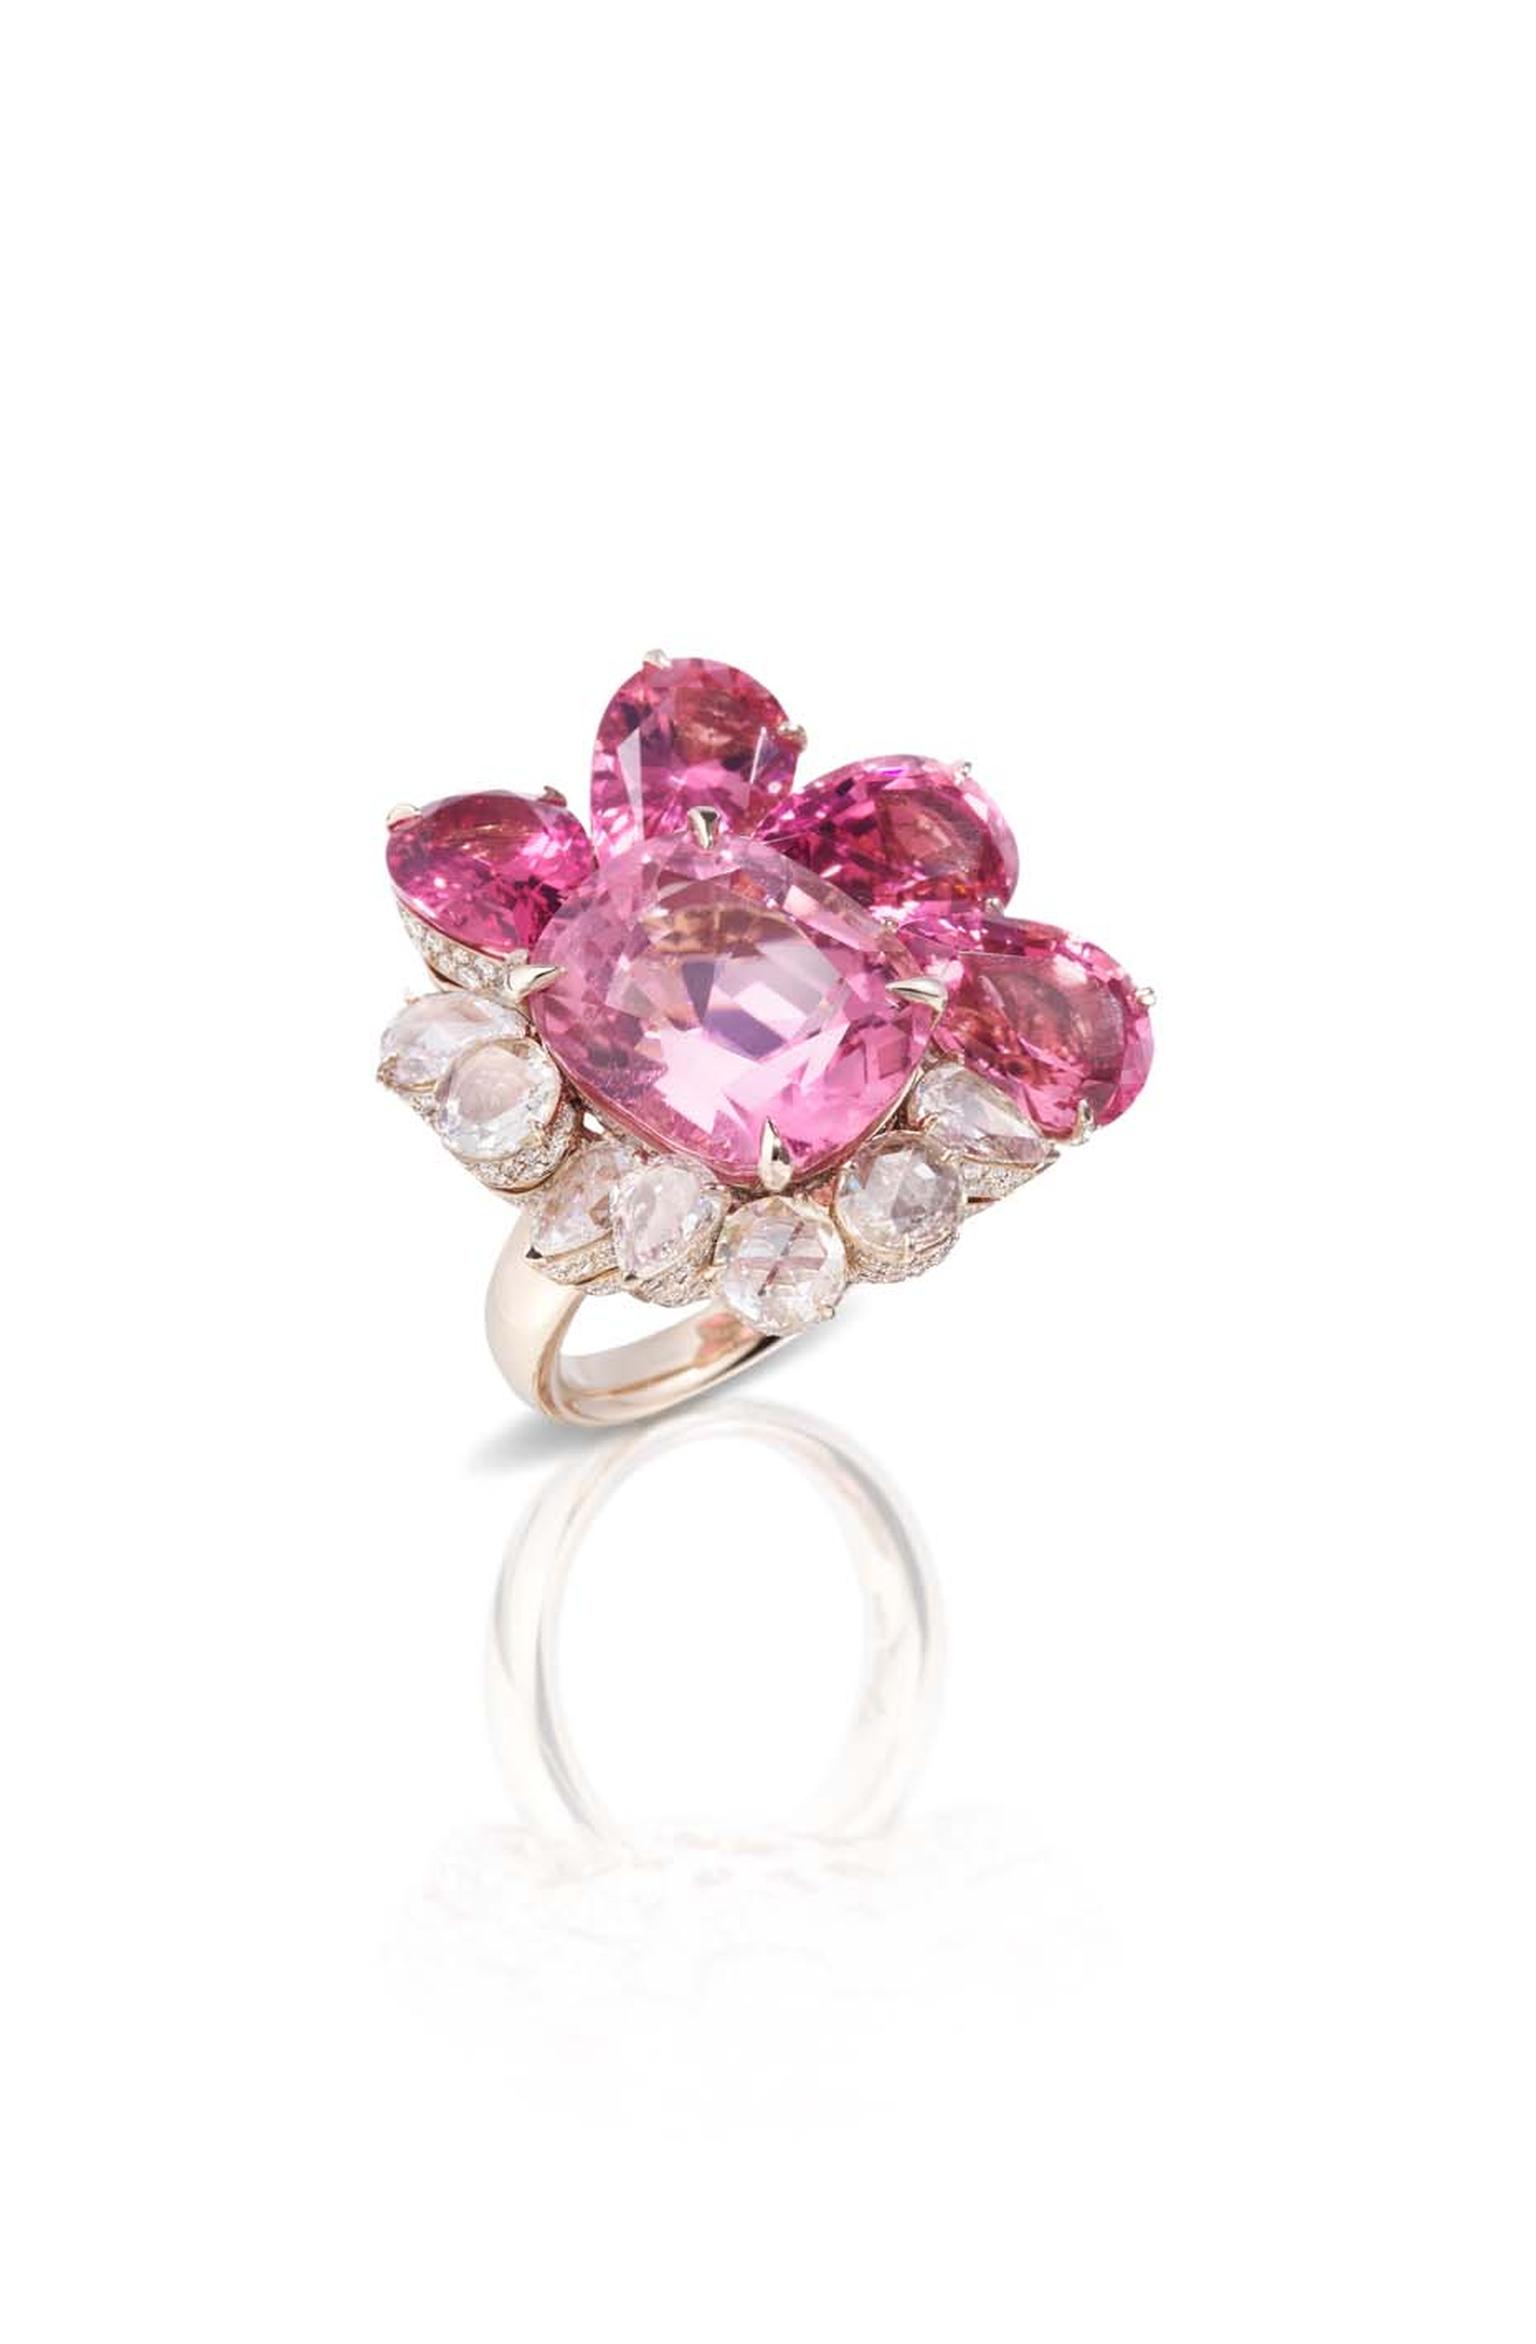 Pomellato Pom Pom ring featuring pink tourmalines and diamonds.